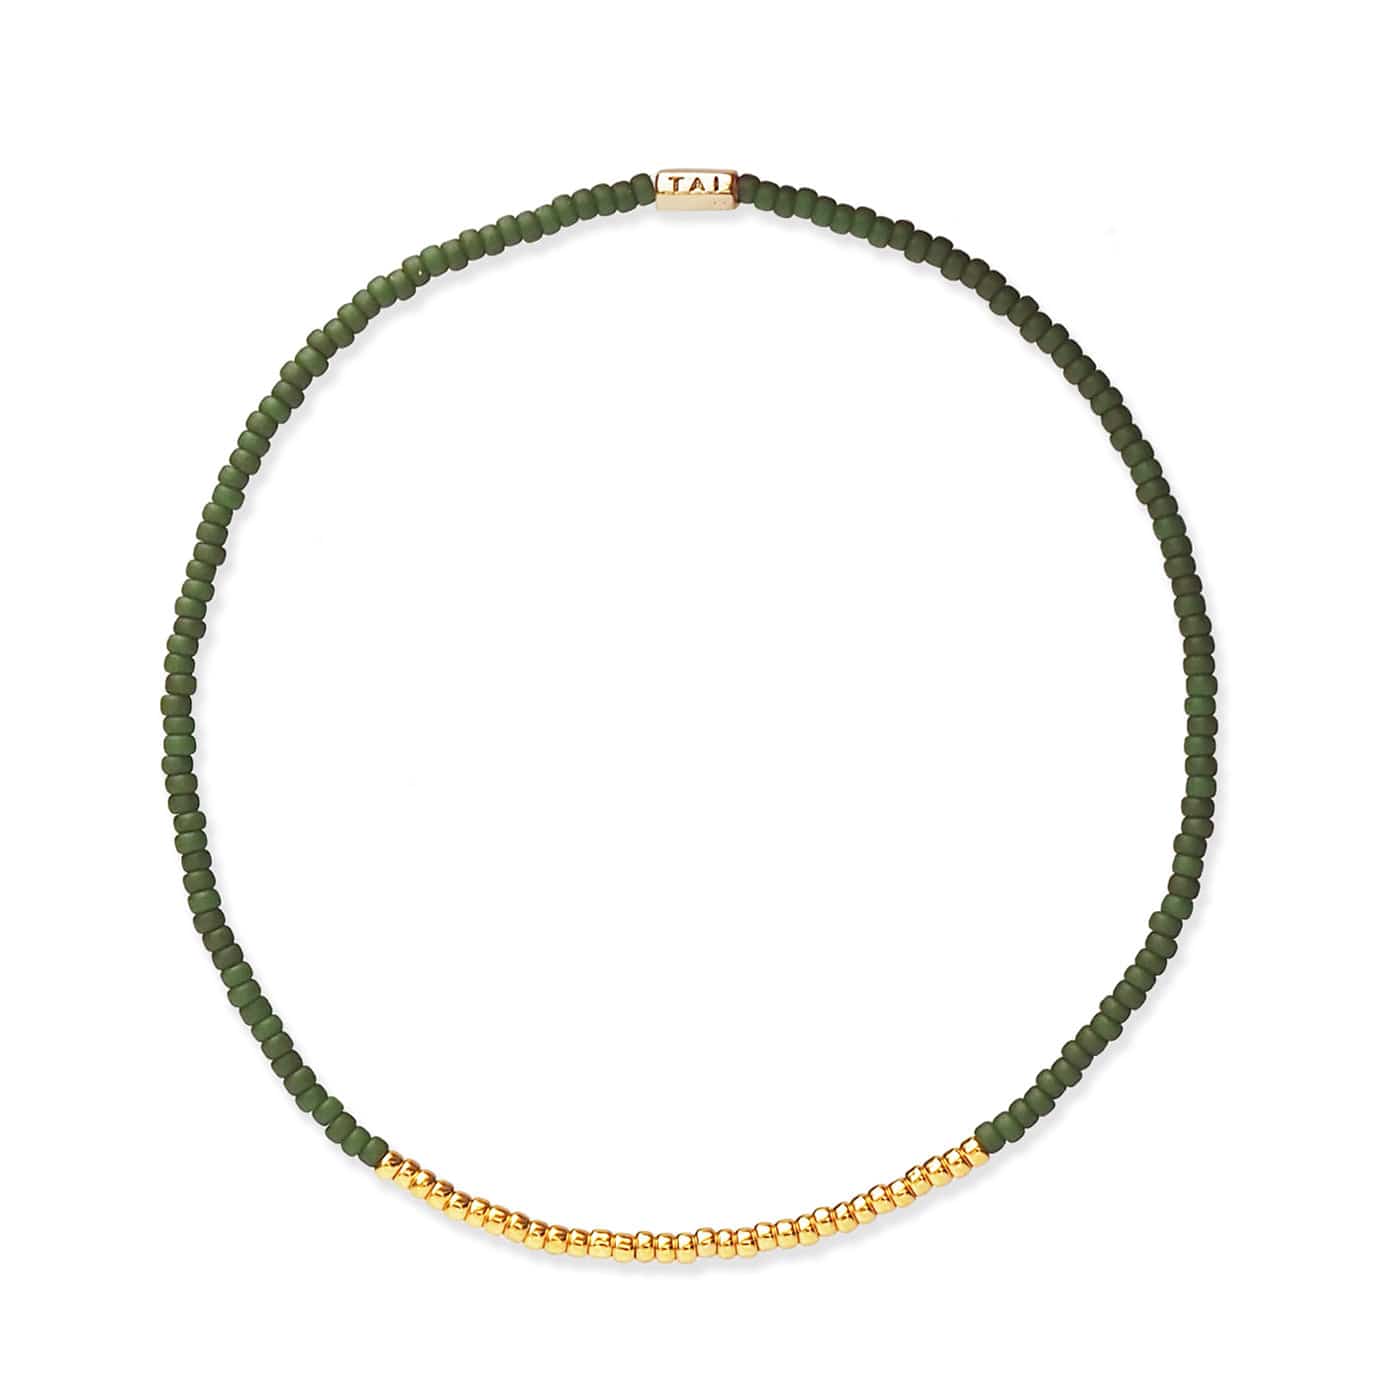 TAI JEWELRY Bracelet FOREST GREEN Praew Bracelet Beaded With Gold Accents